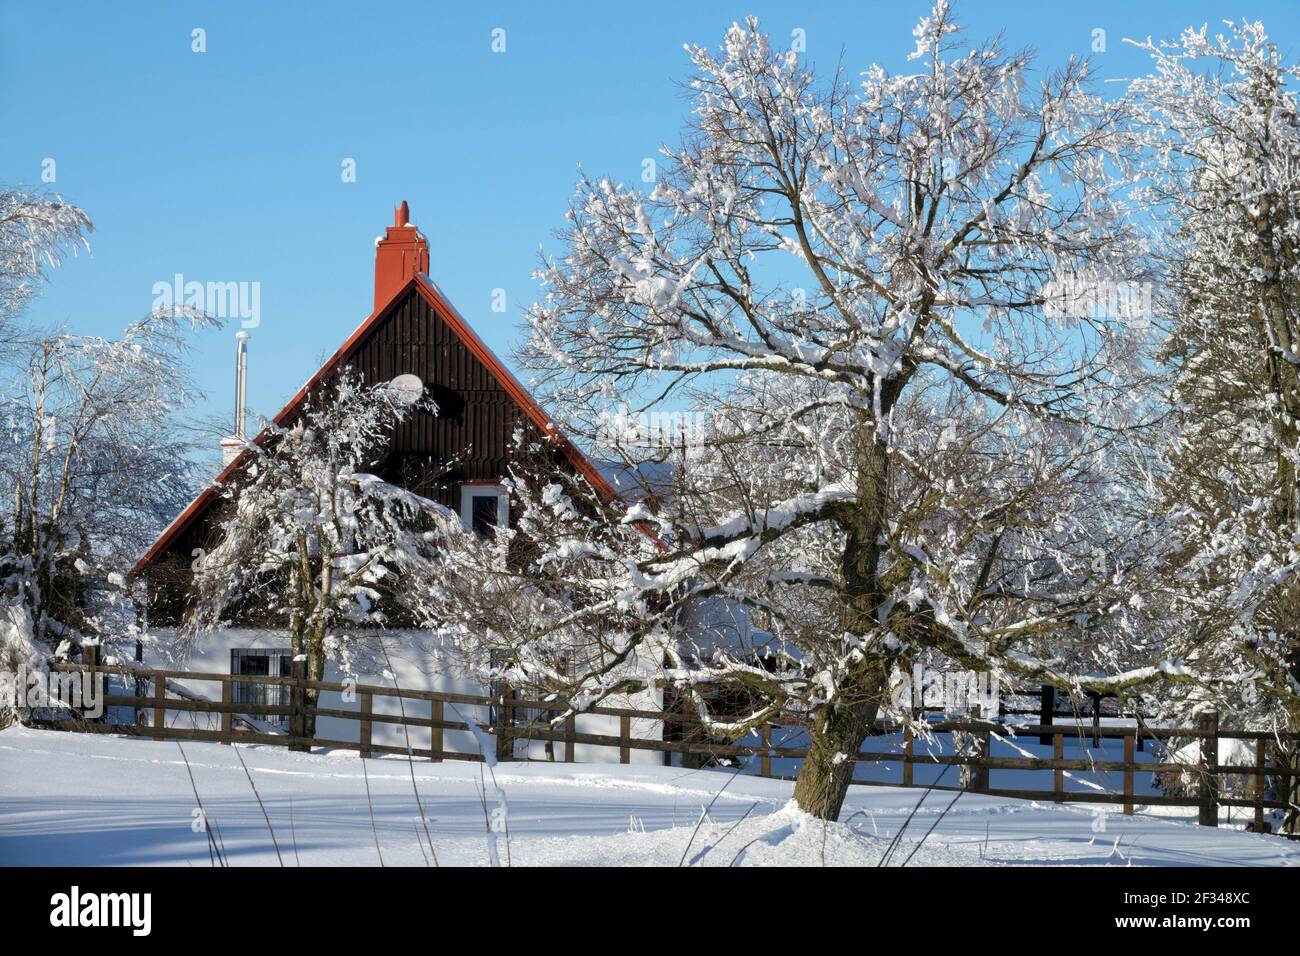 Picturesque rural house Czech Republic snow scenery Stock Photo